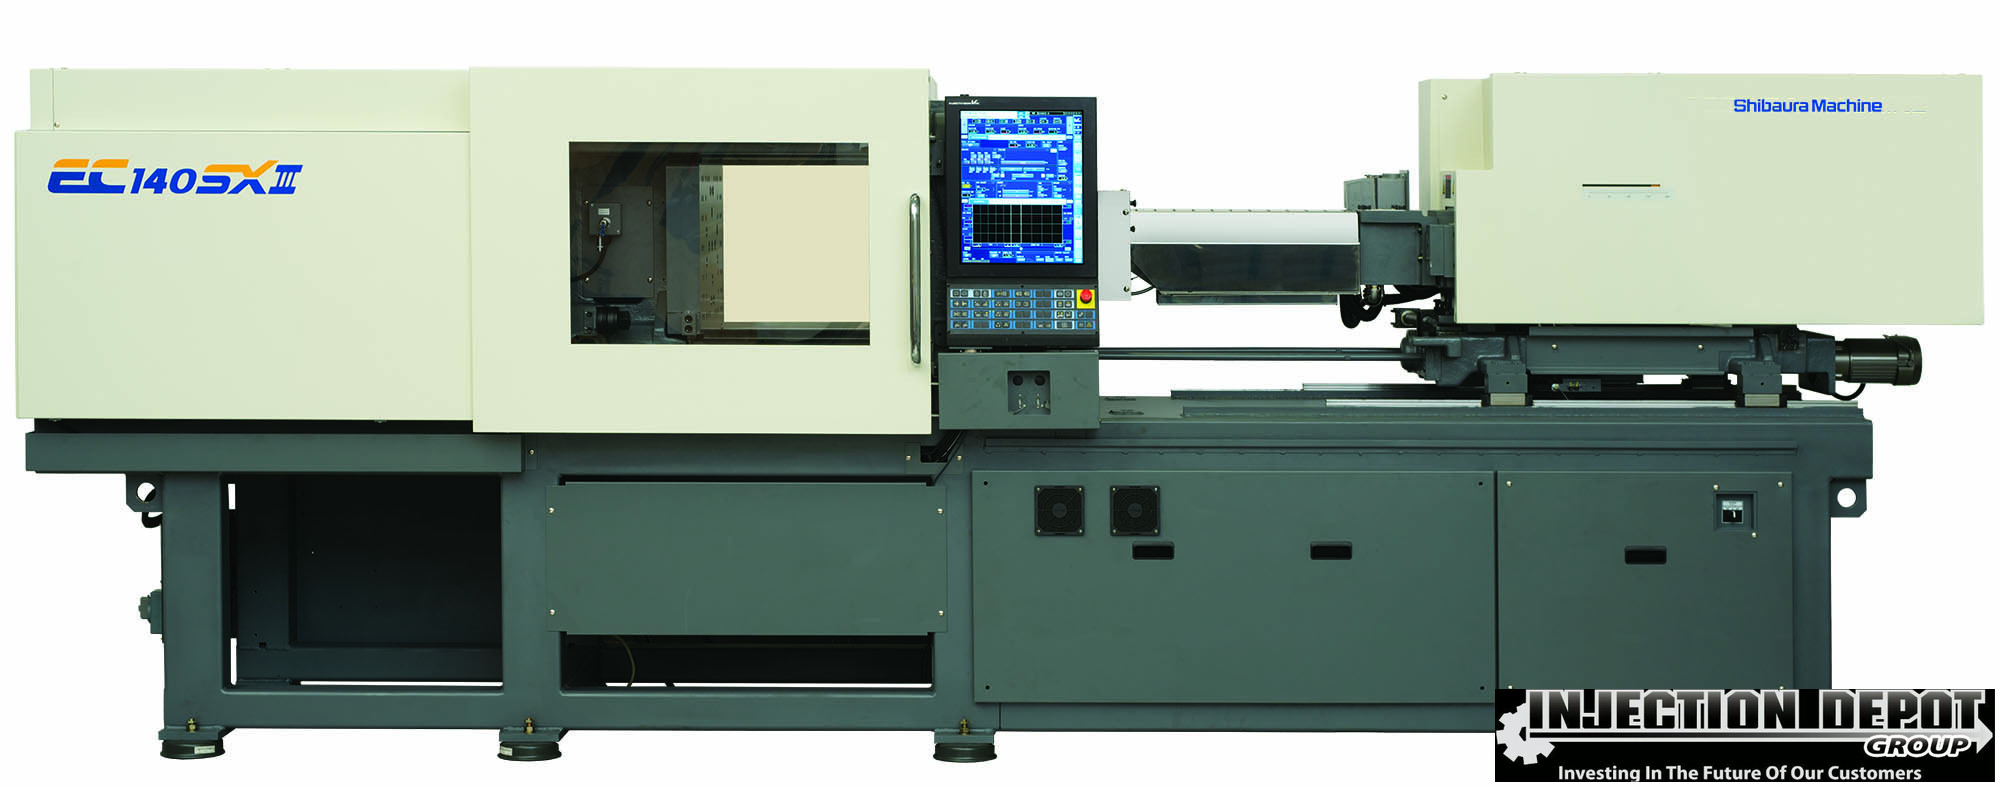 SHIBAURA MACHINE EC140SXIIIV70-U34 4B Horizontal Injection Moulding Machines | INJECTION DEPOT GROUP